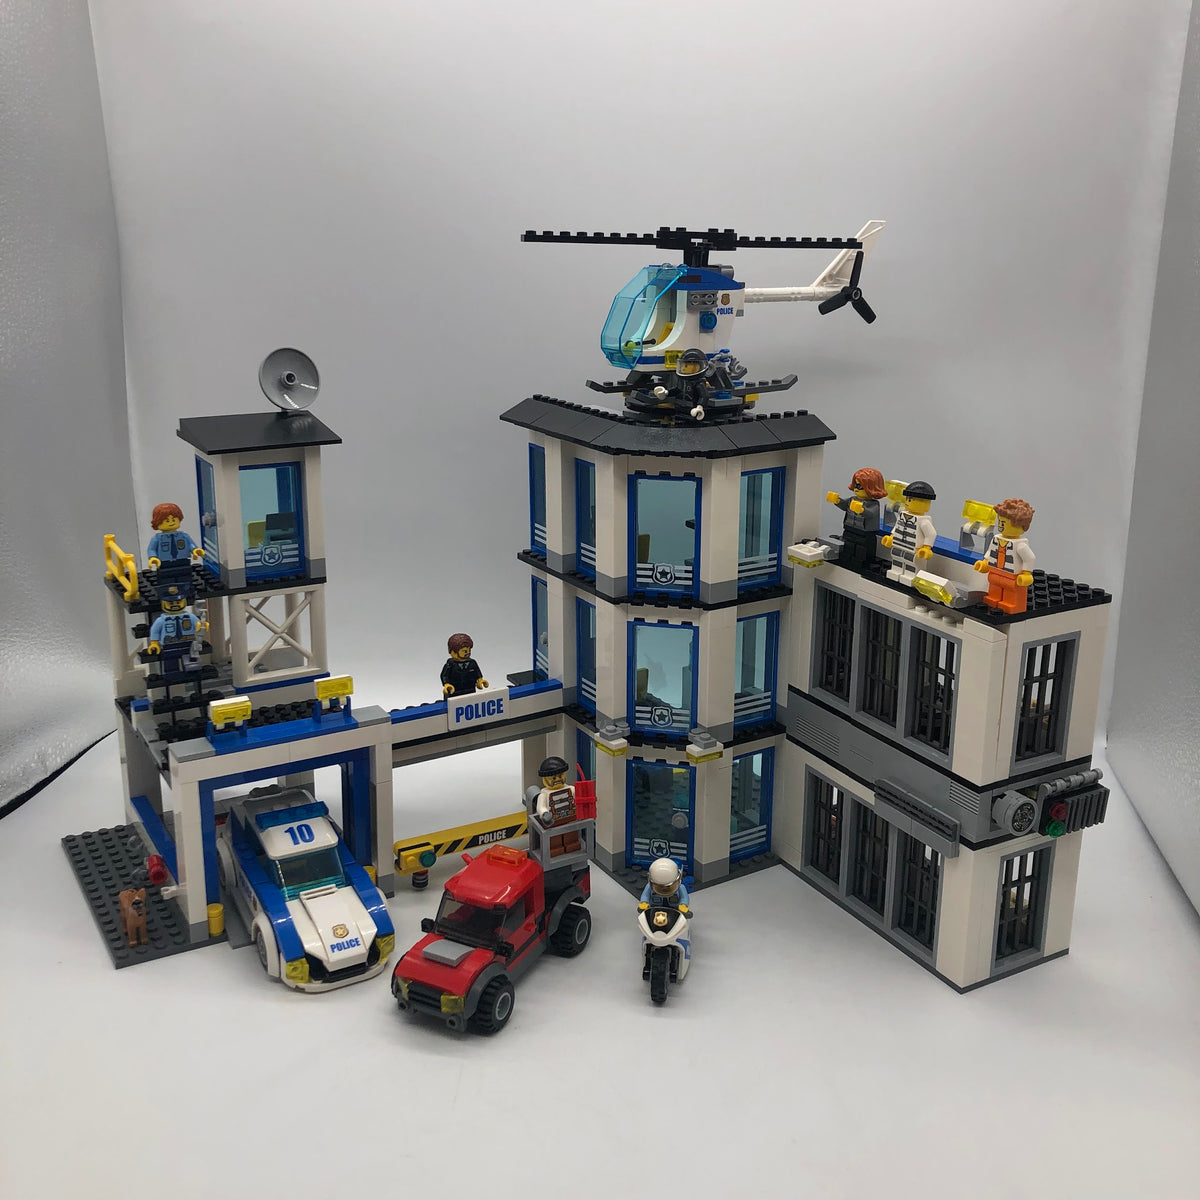 Brand new Lego 60141 City Police Station Building Kit